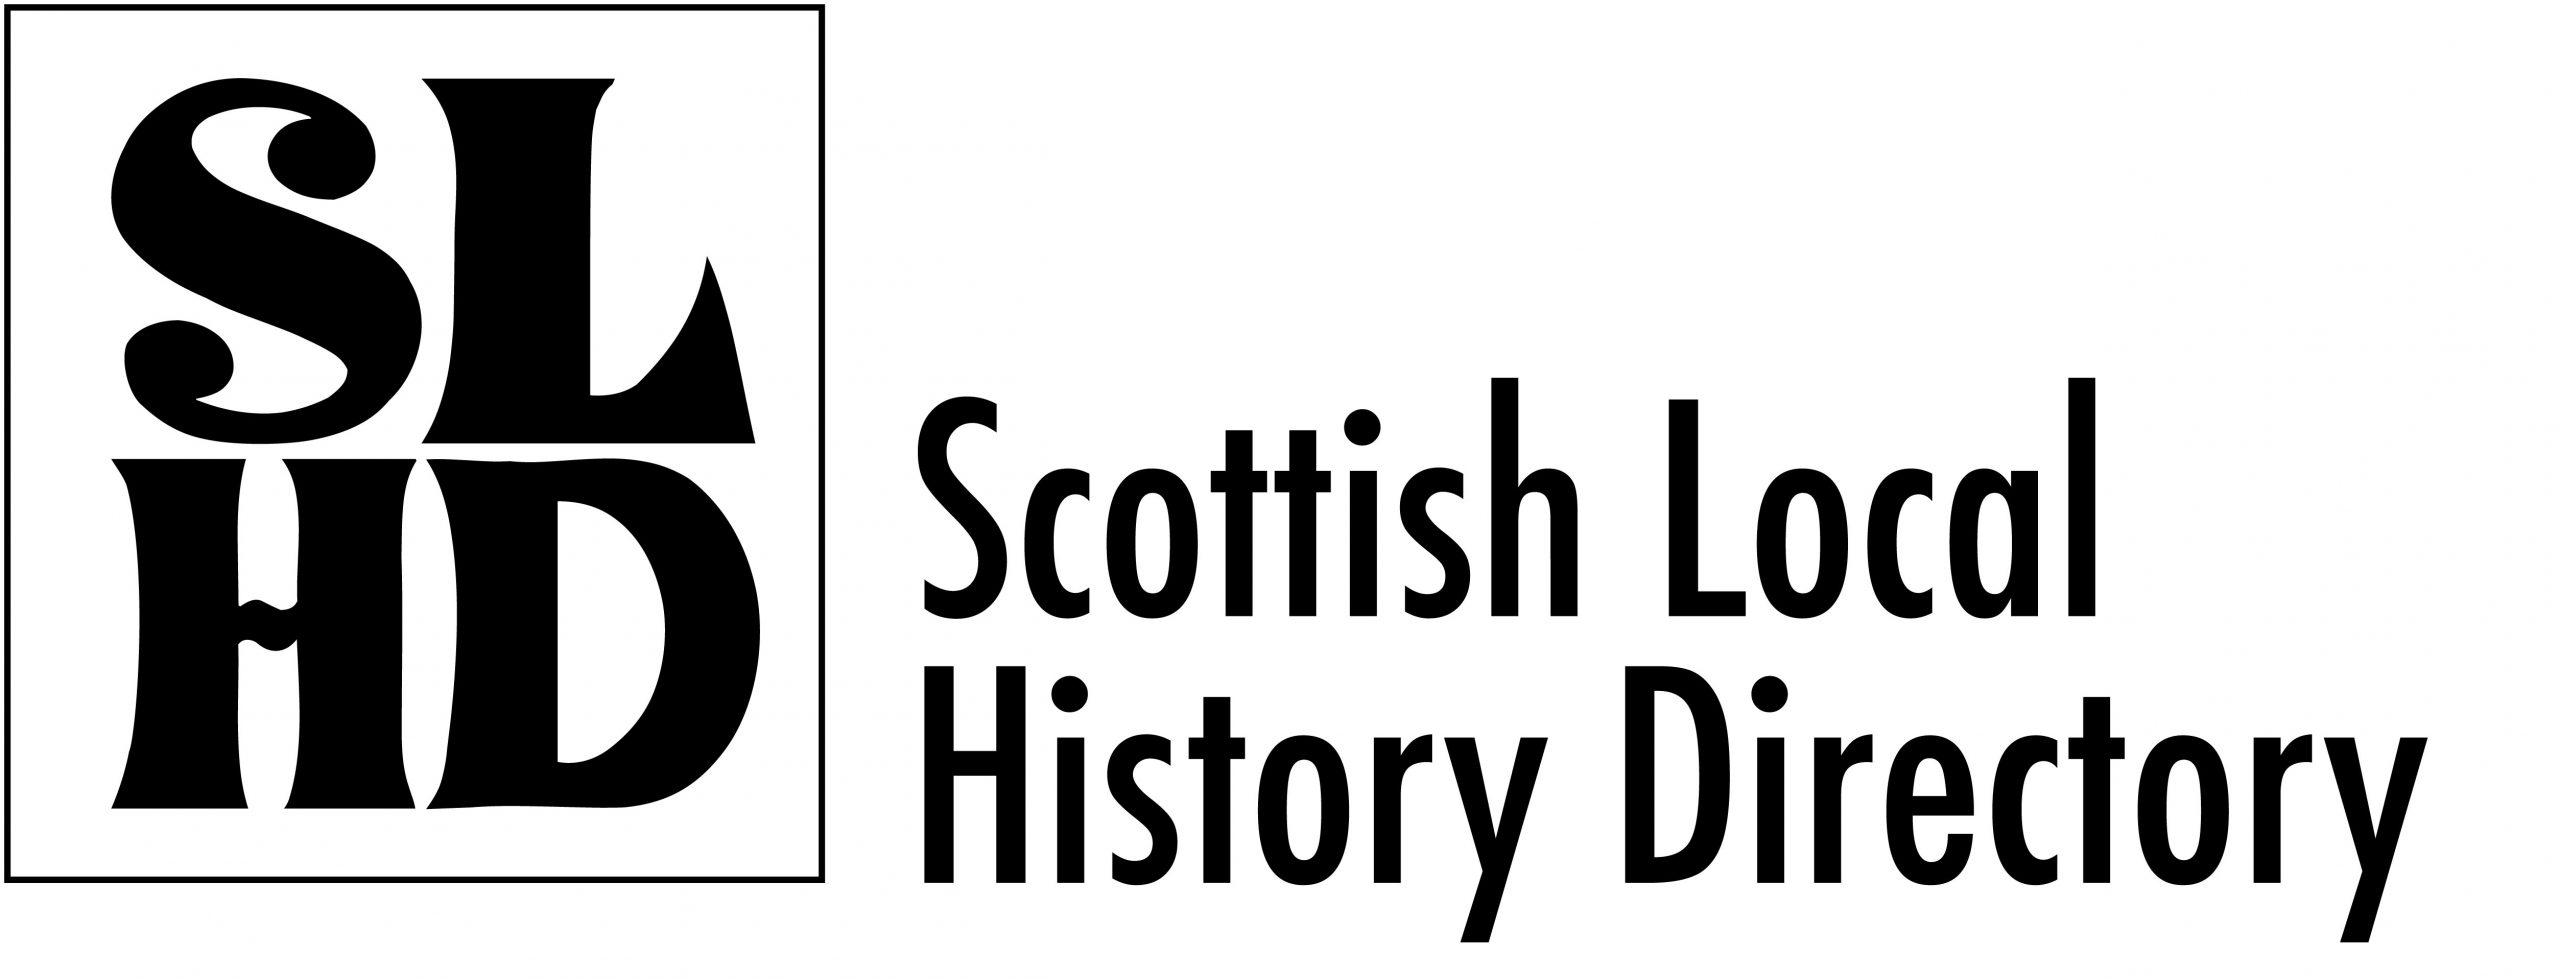 Scottish Local History Directory